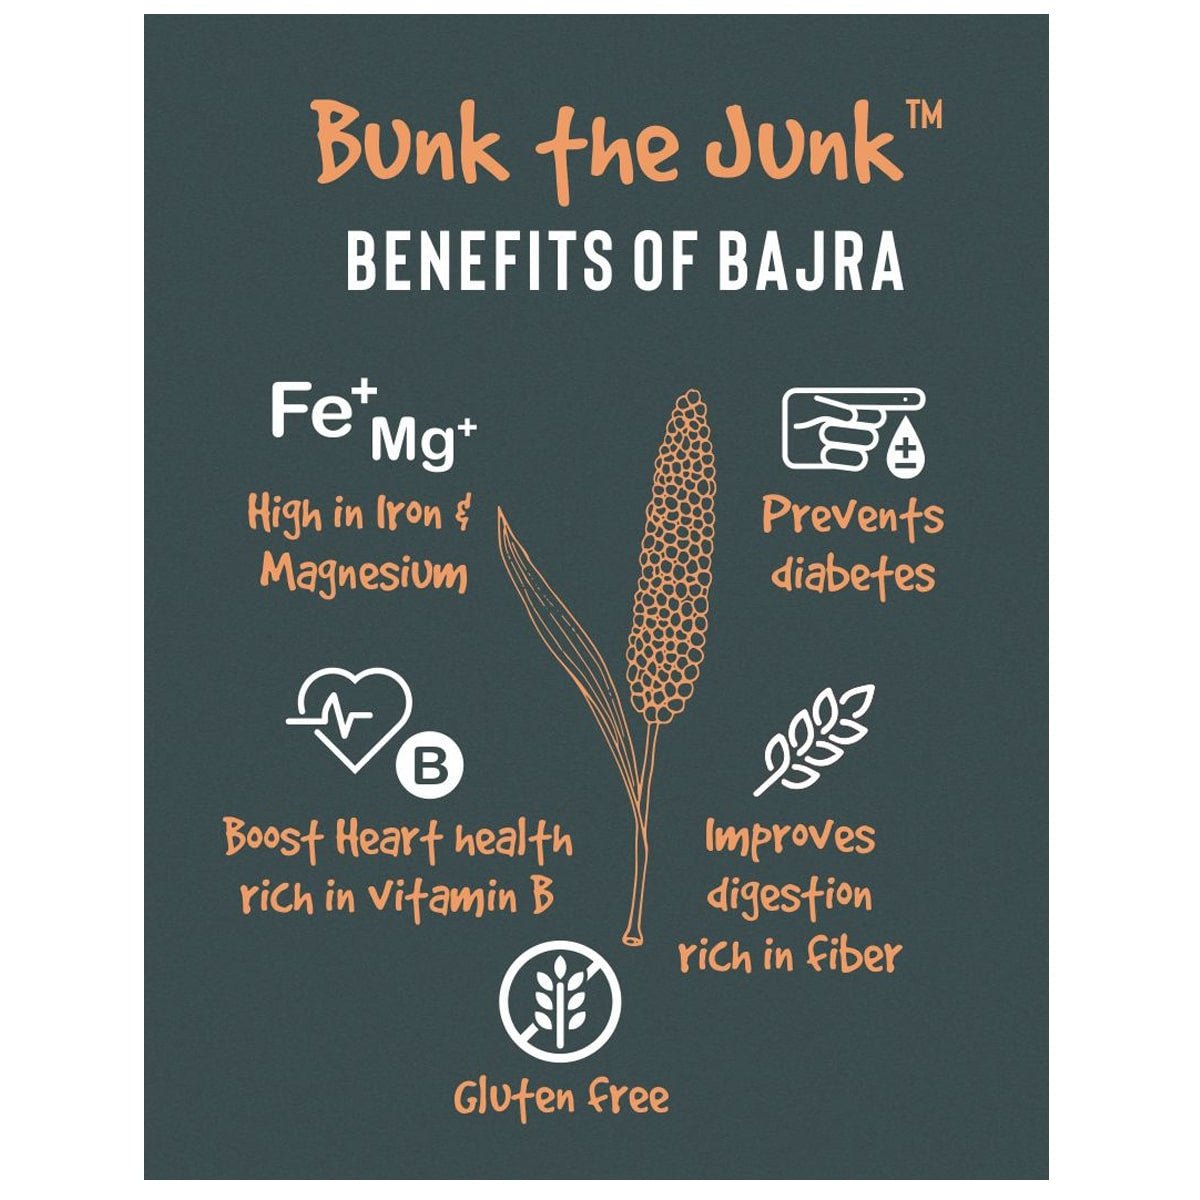 Unlock Health: Buy Eat Anytime Bajra Bars Online - Best Deals Await